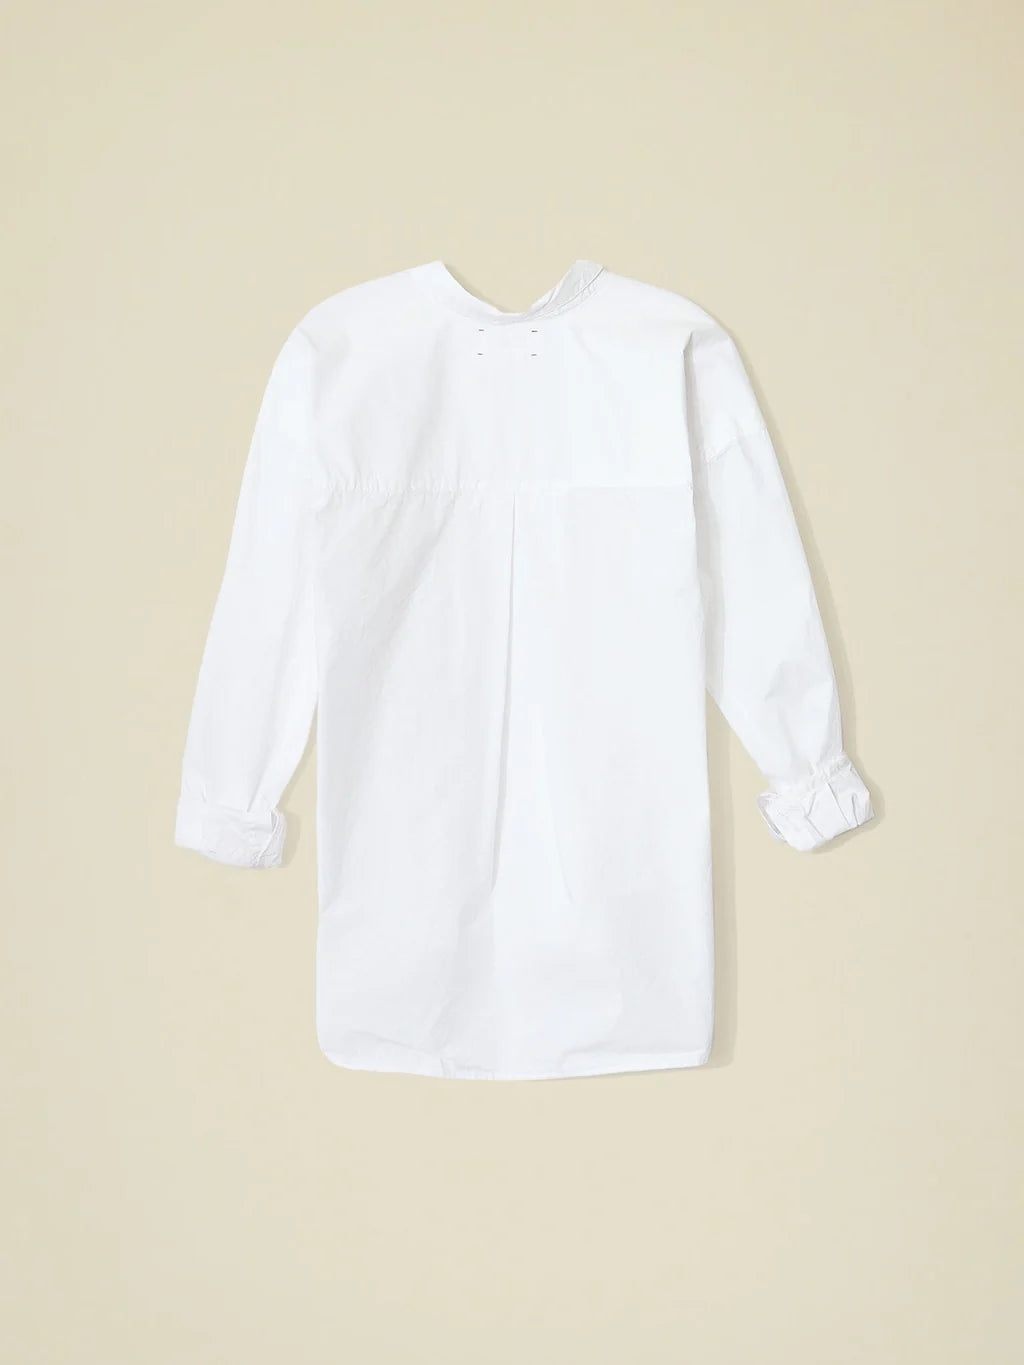 Jordy Shirt in White